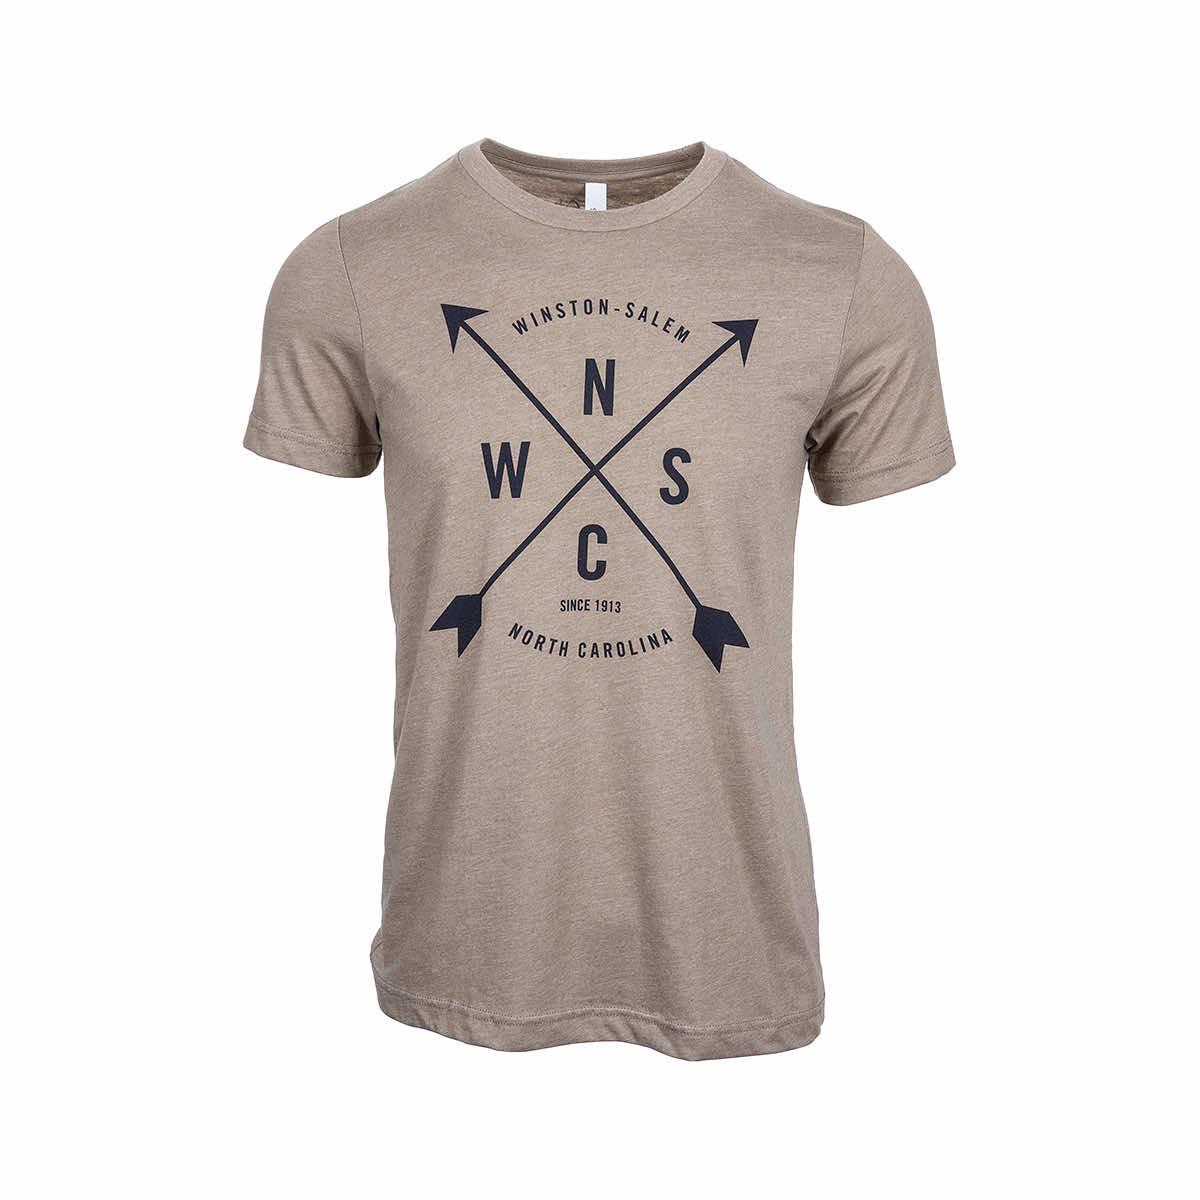  Winston Salem Nc Arrows Short Sleeve T- Shirt